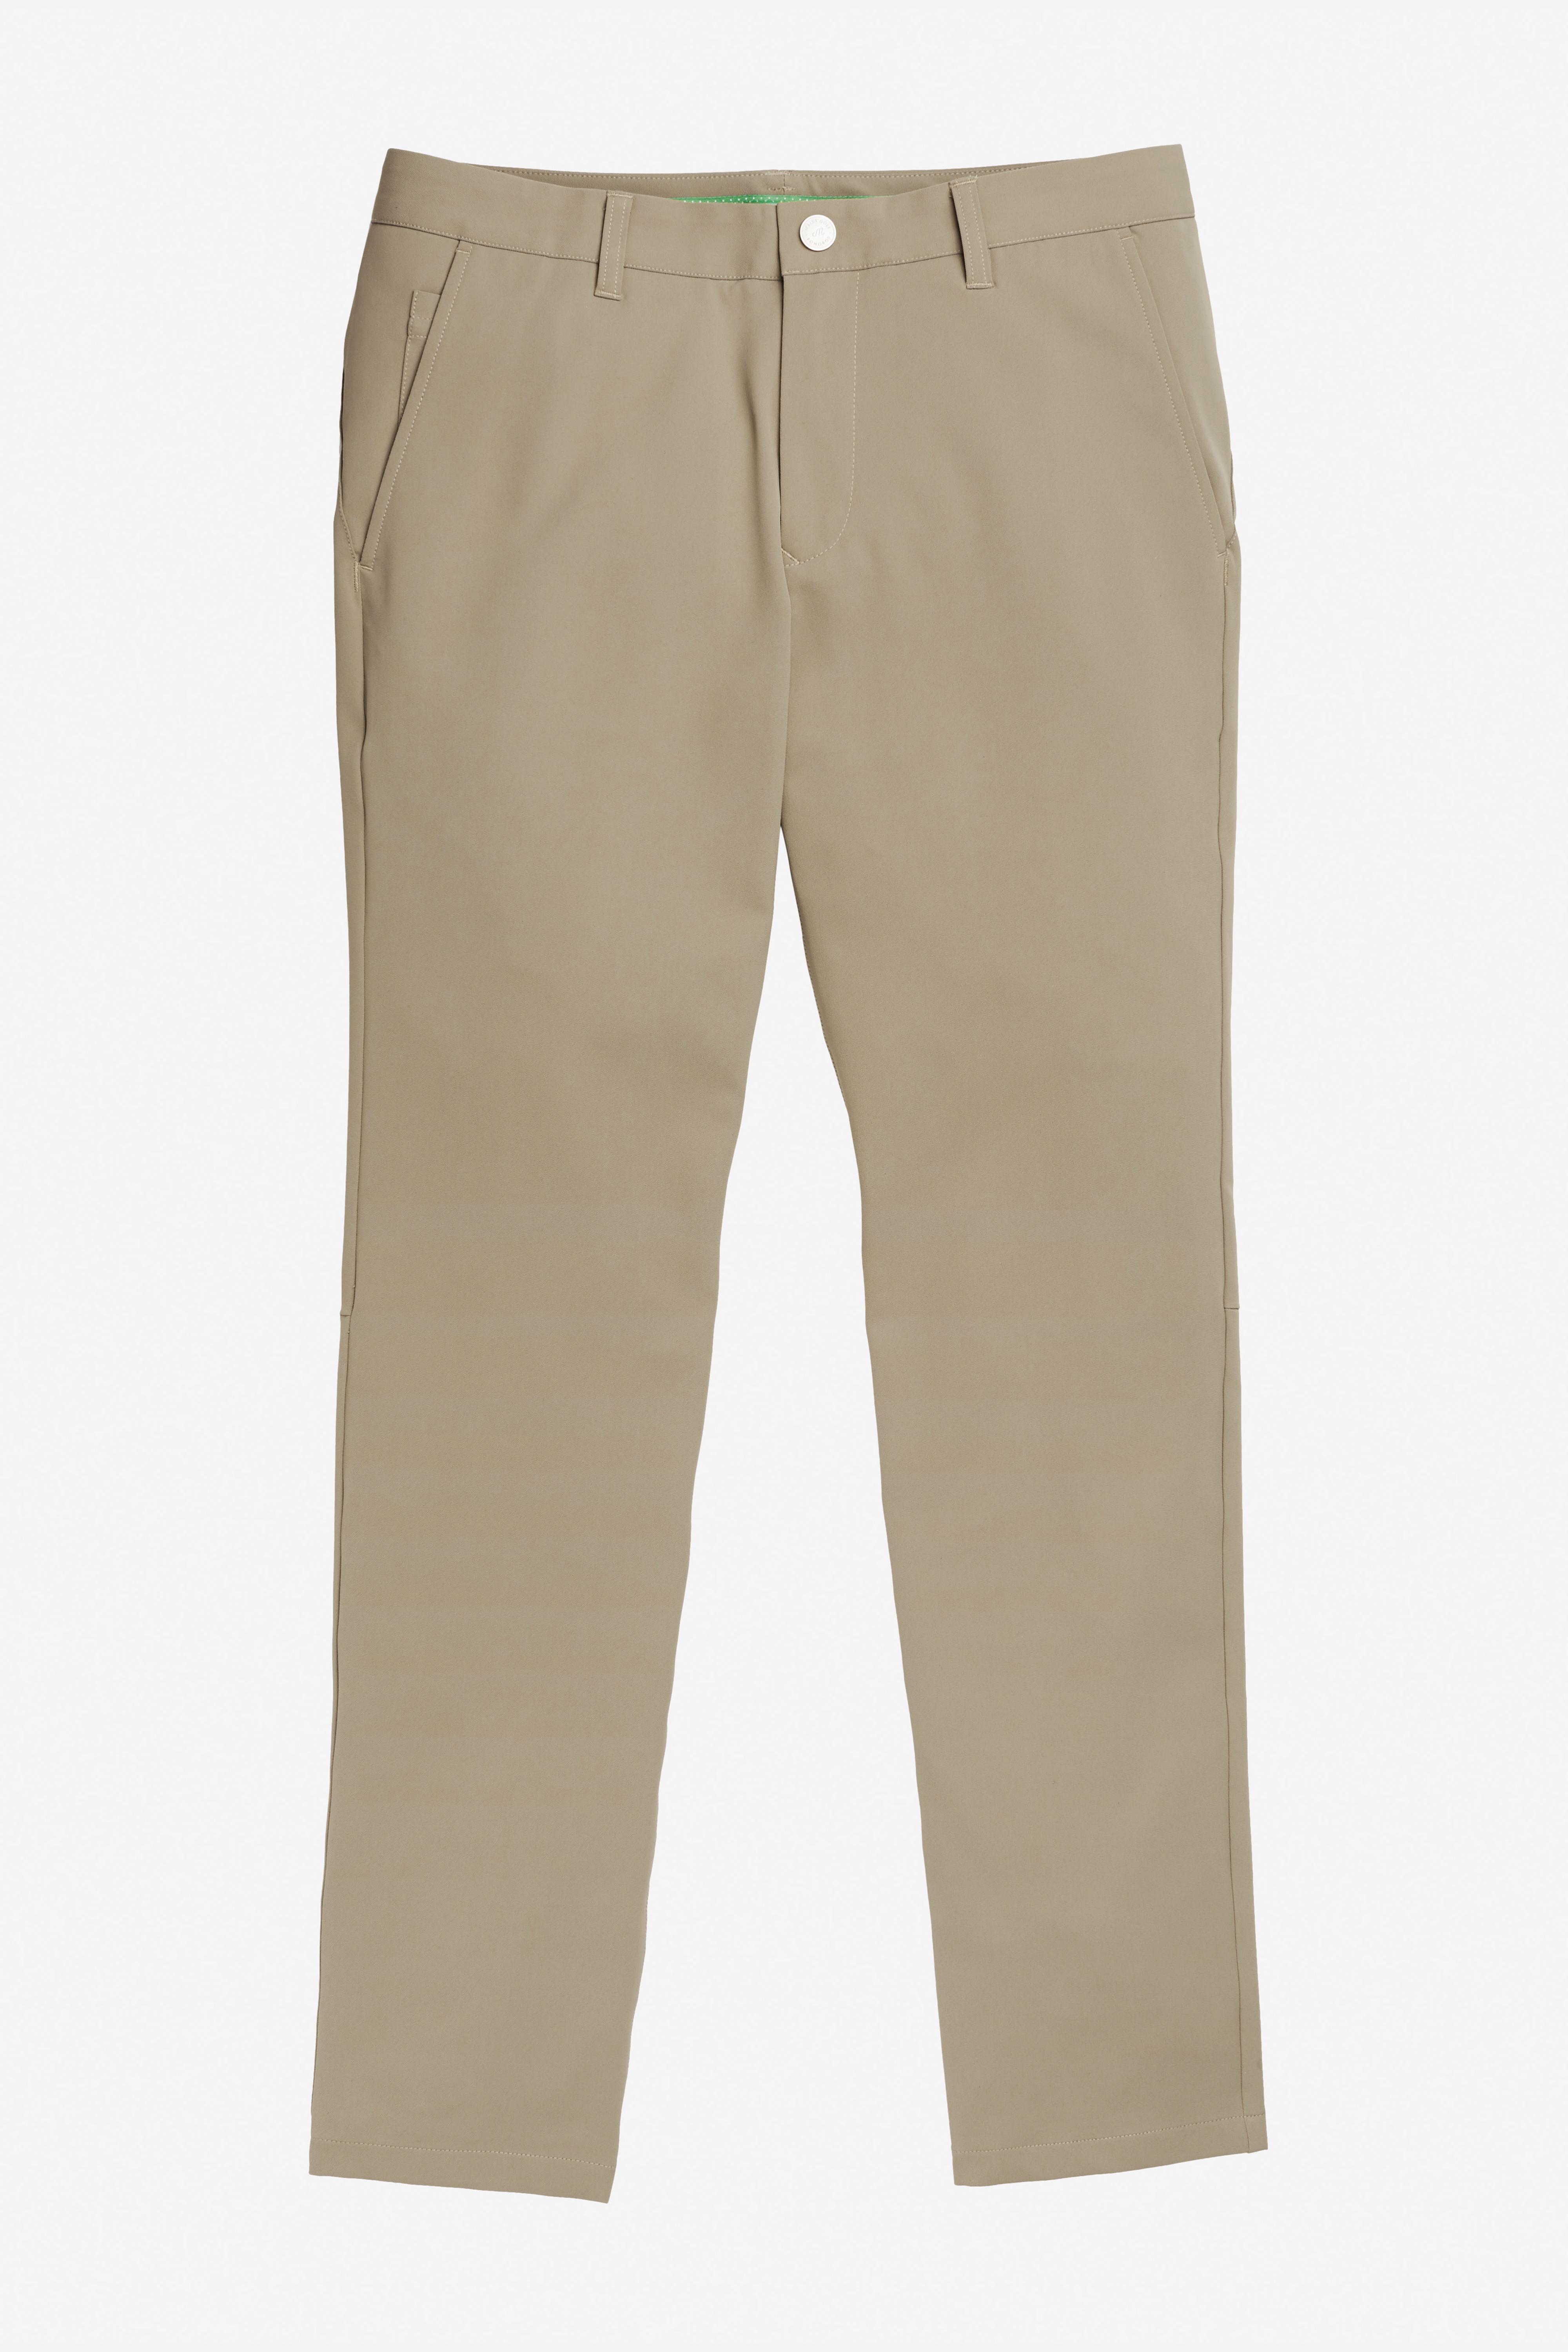 Bonobos Synthetic Highland Tour Golf Pants in Khaki (Natural) for Men ...